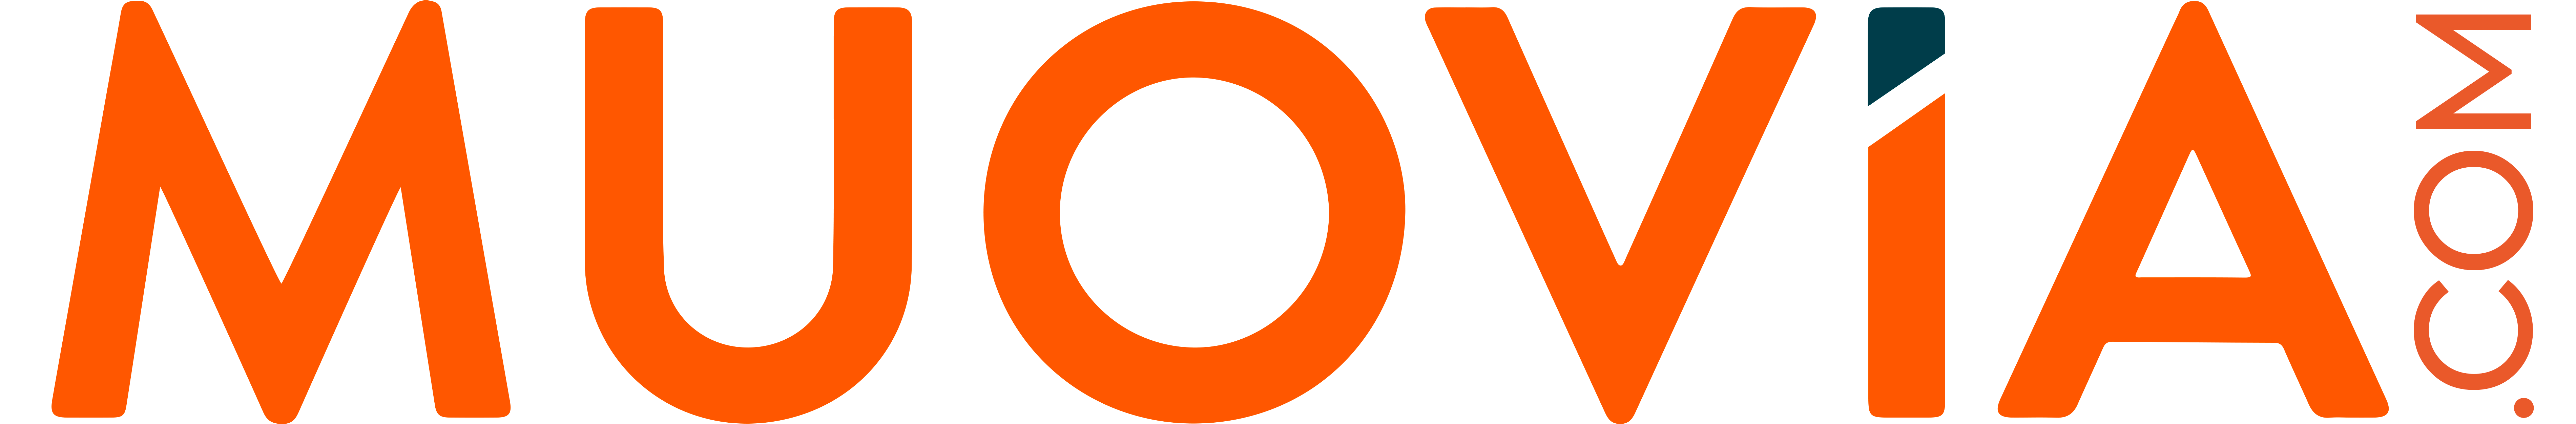 MUOVIAcom logo oranssi valkoisella pohjalla